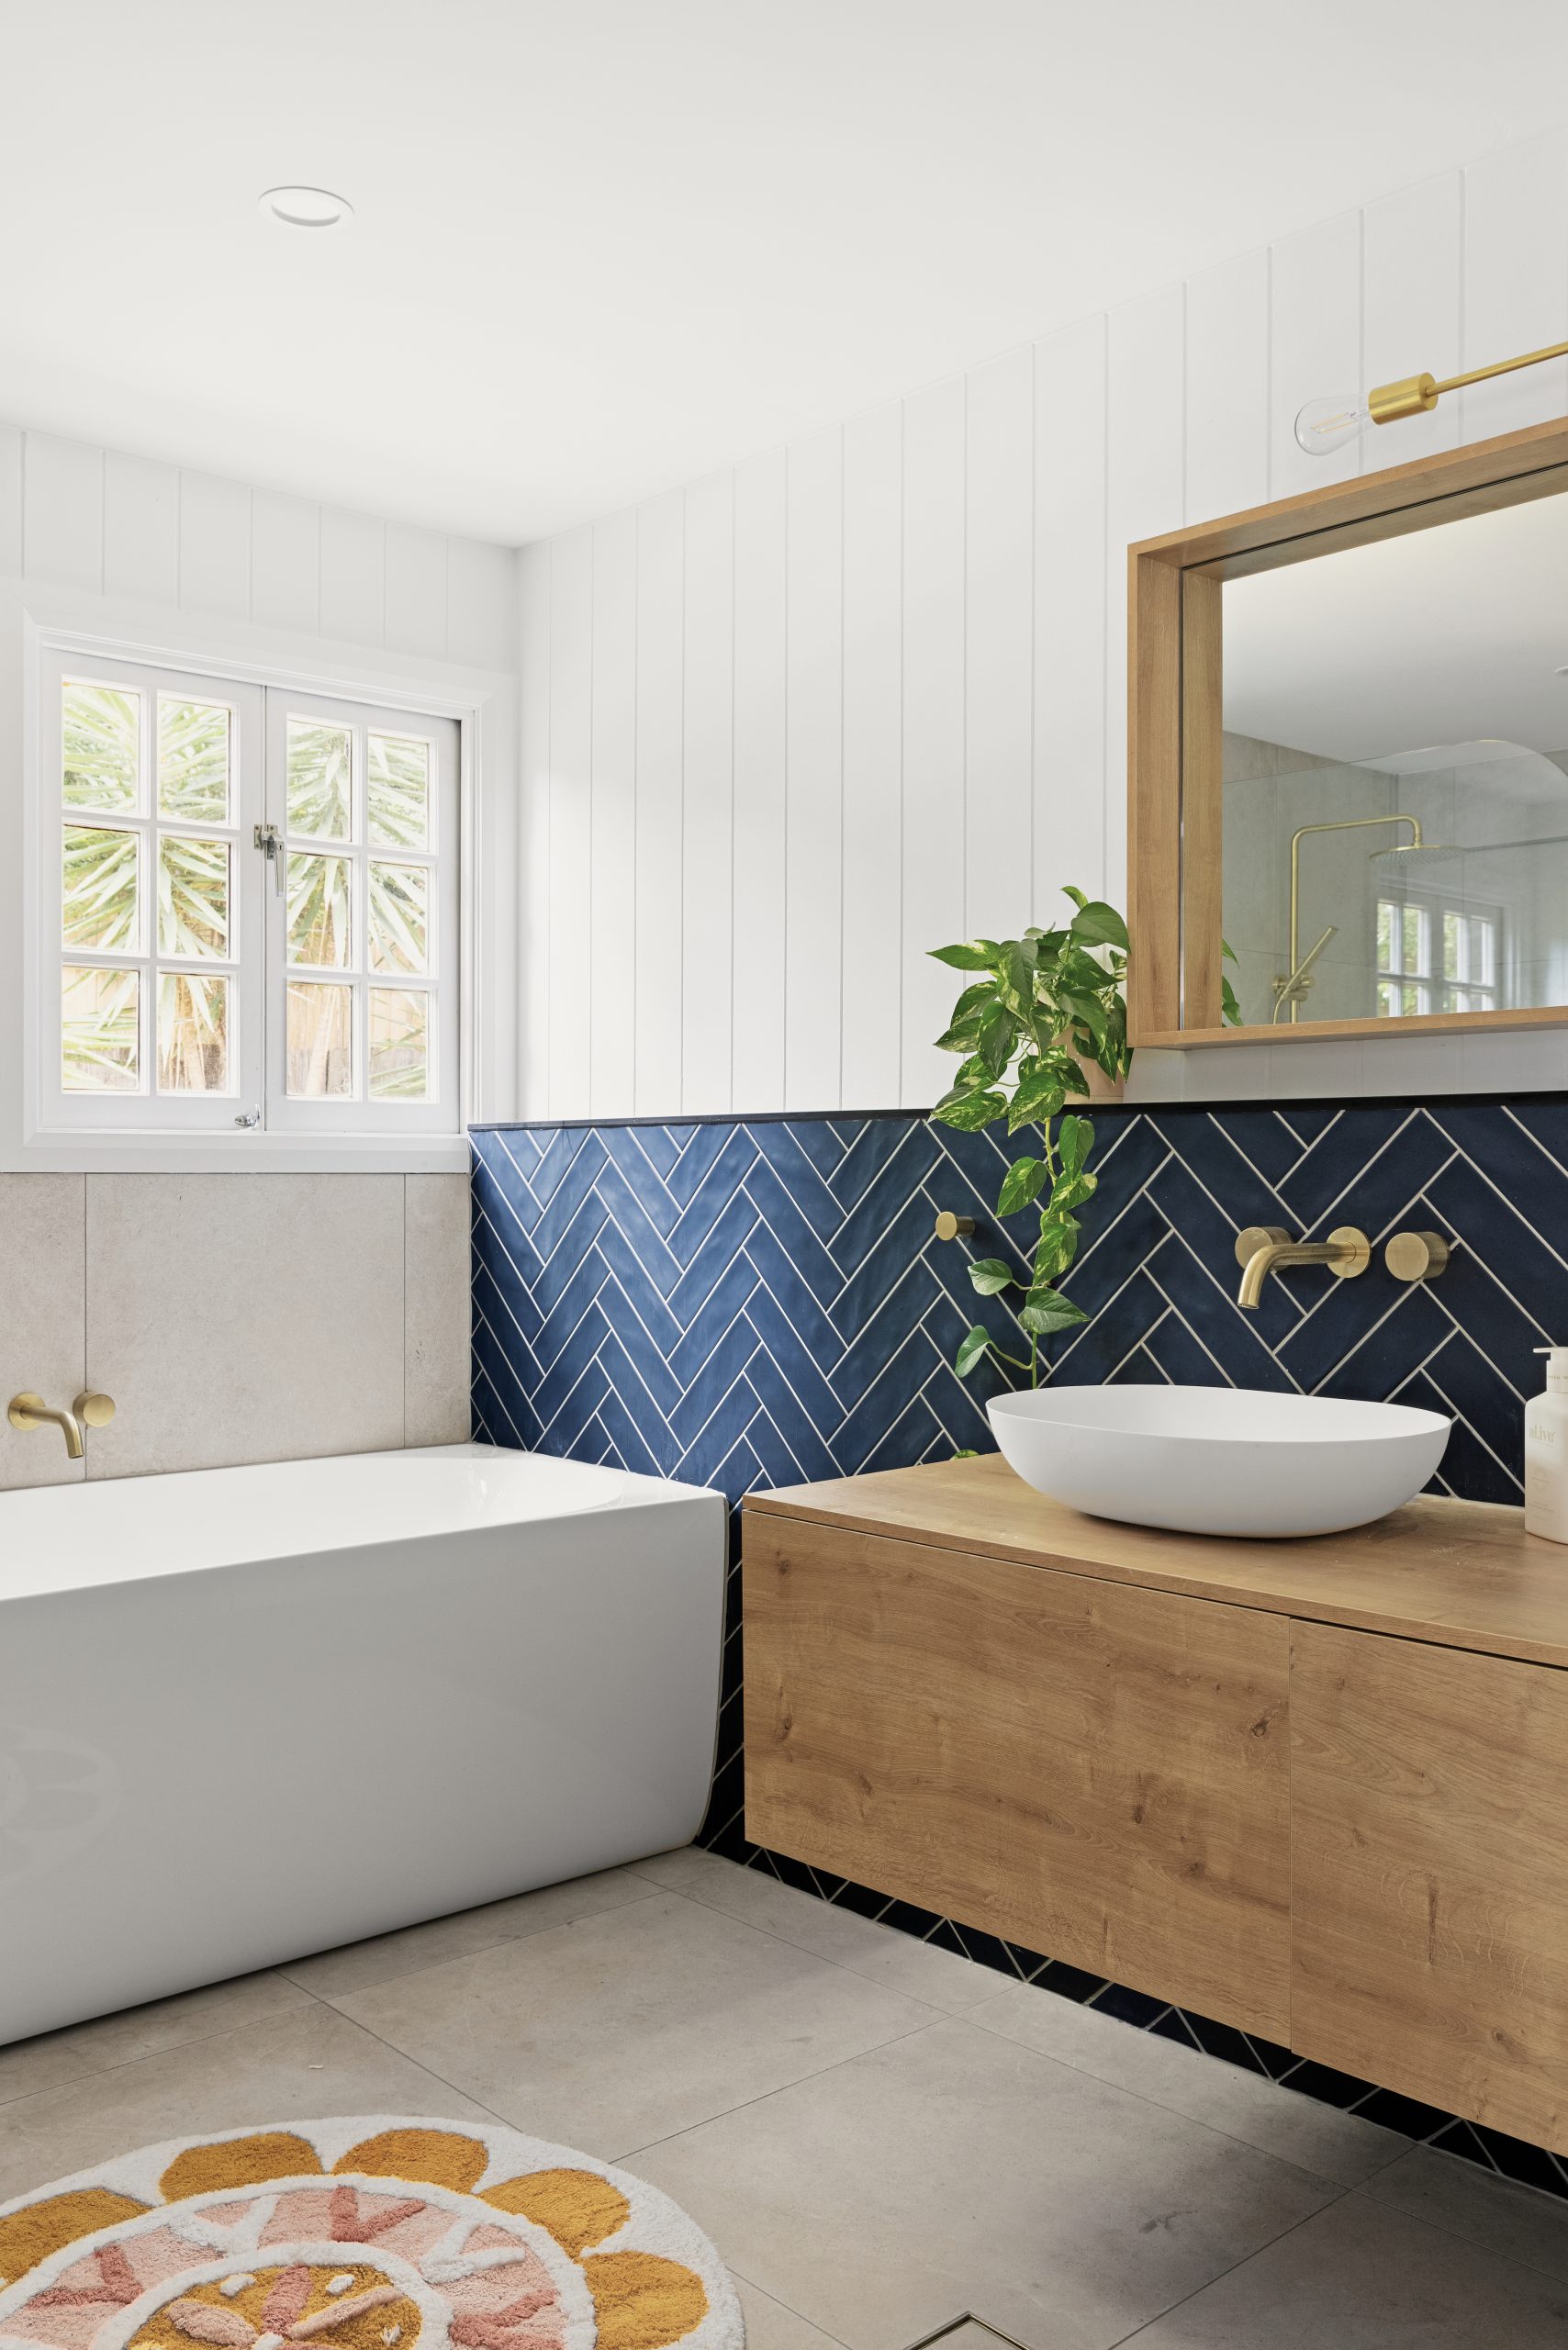 Blue herringbone bathroom tiles in a modern bathroom renovation after photo.